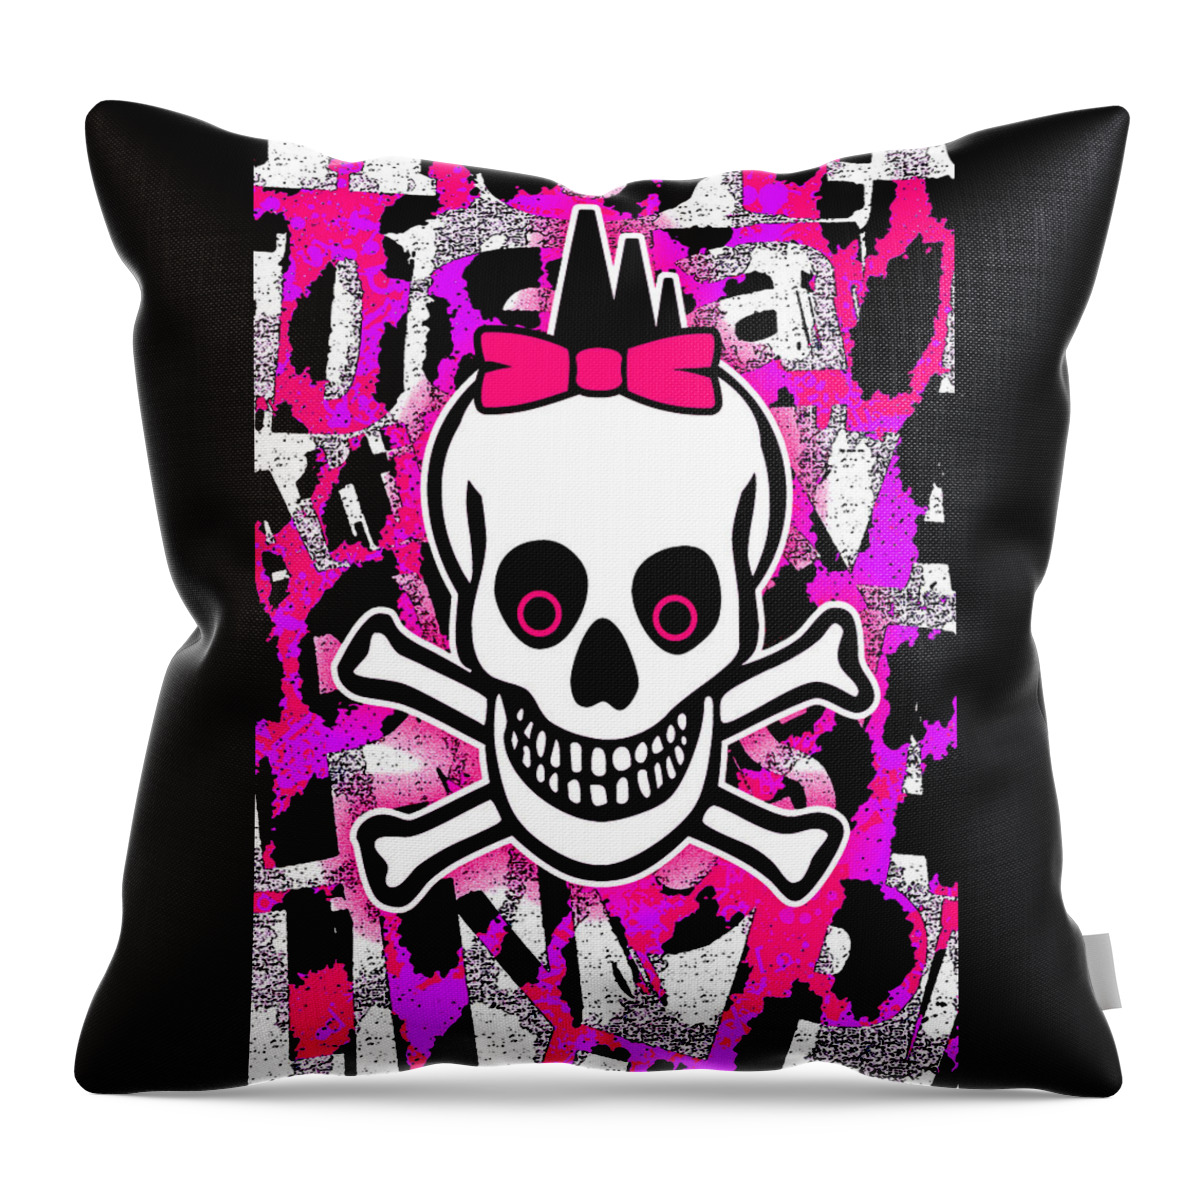 Skull Throw Pillow featuring the digital art Girly Punk Skull #1 by Roseanne Jones